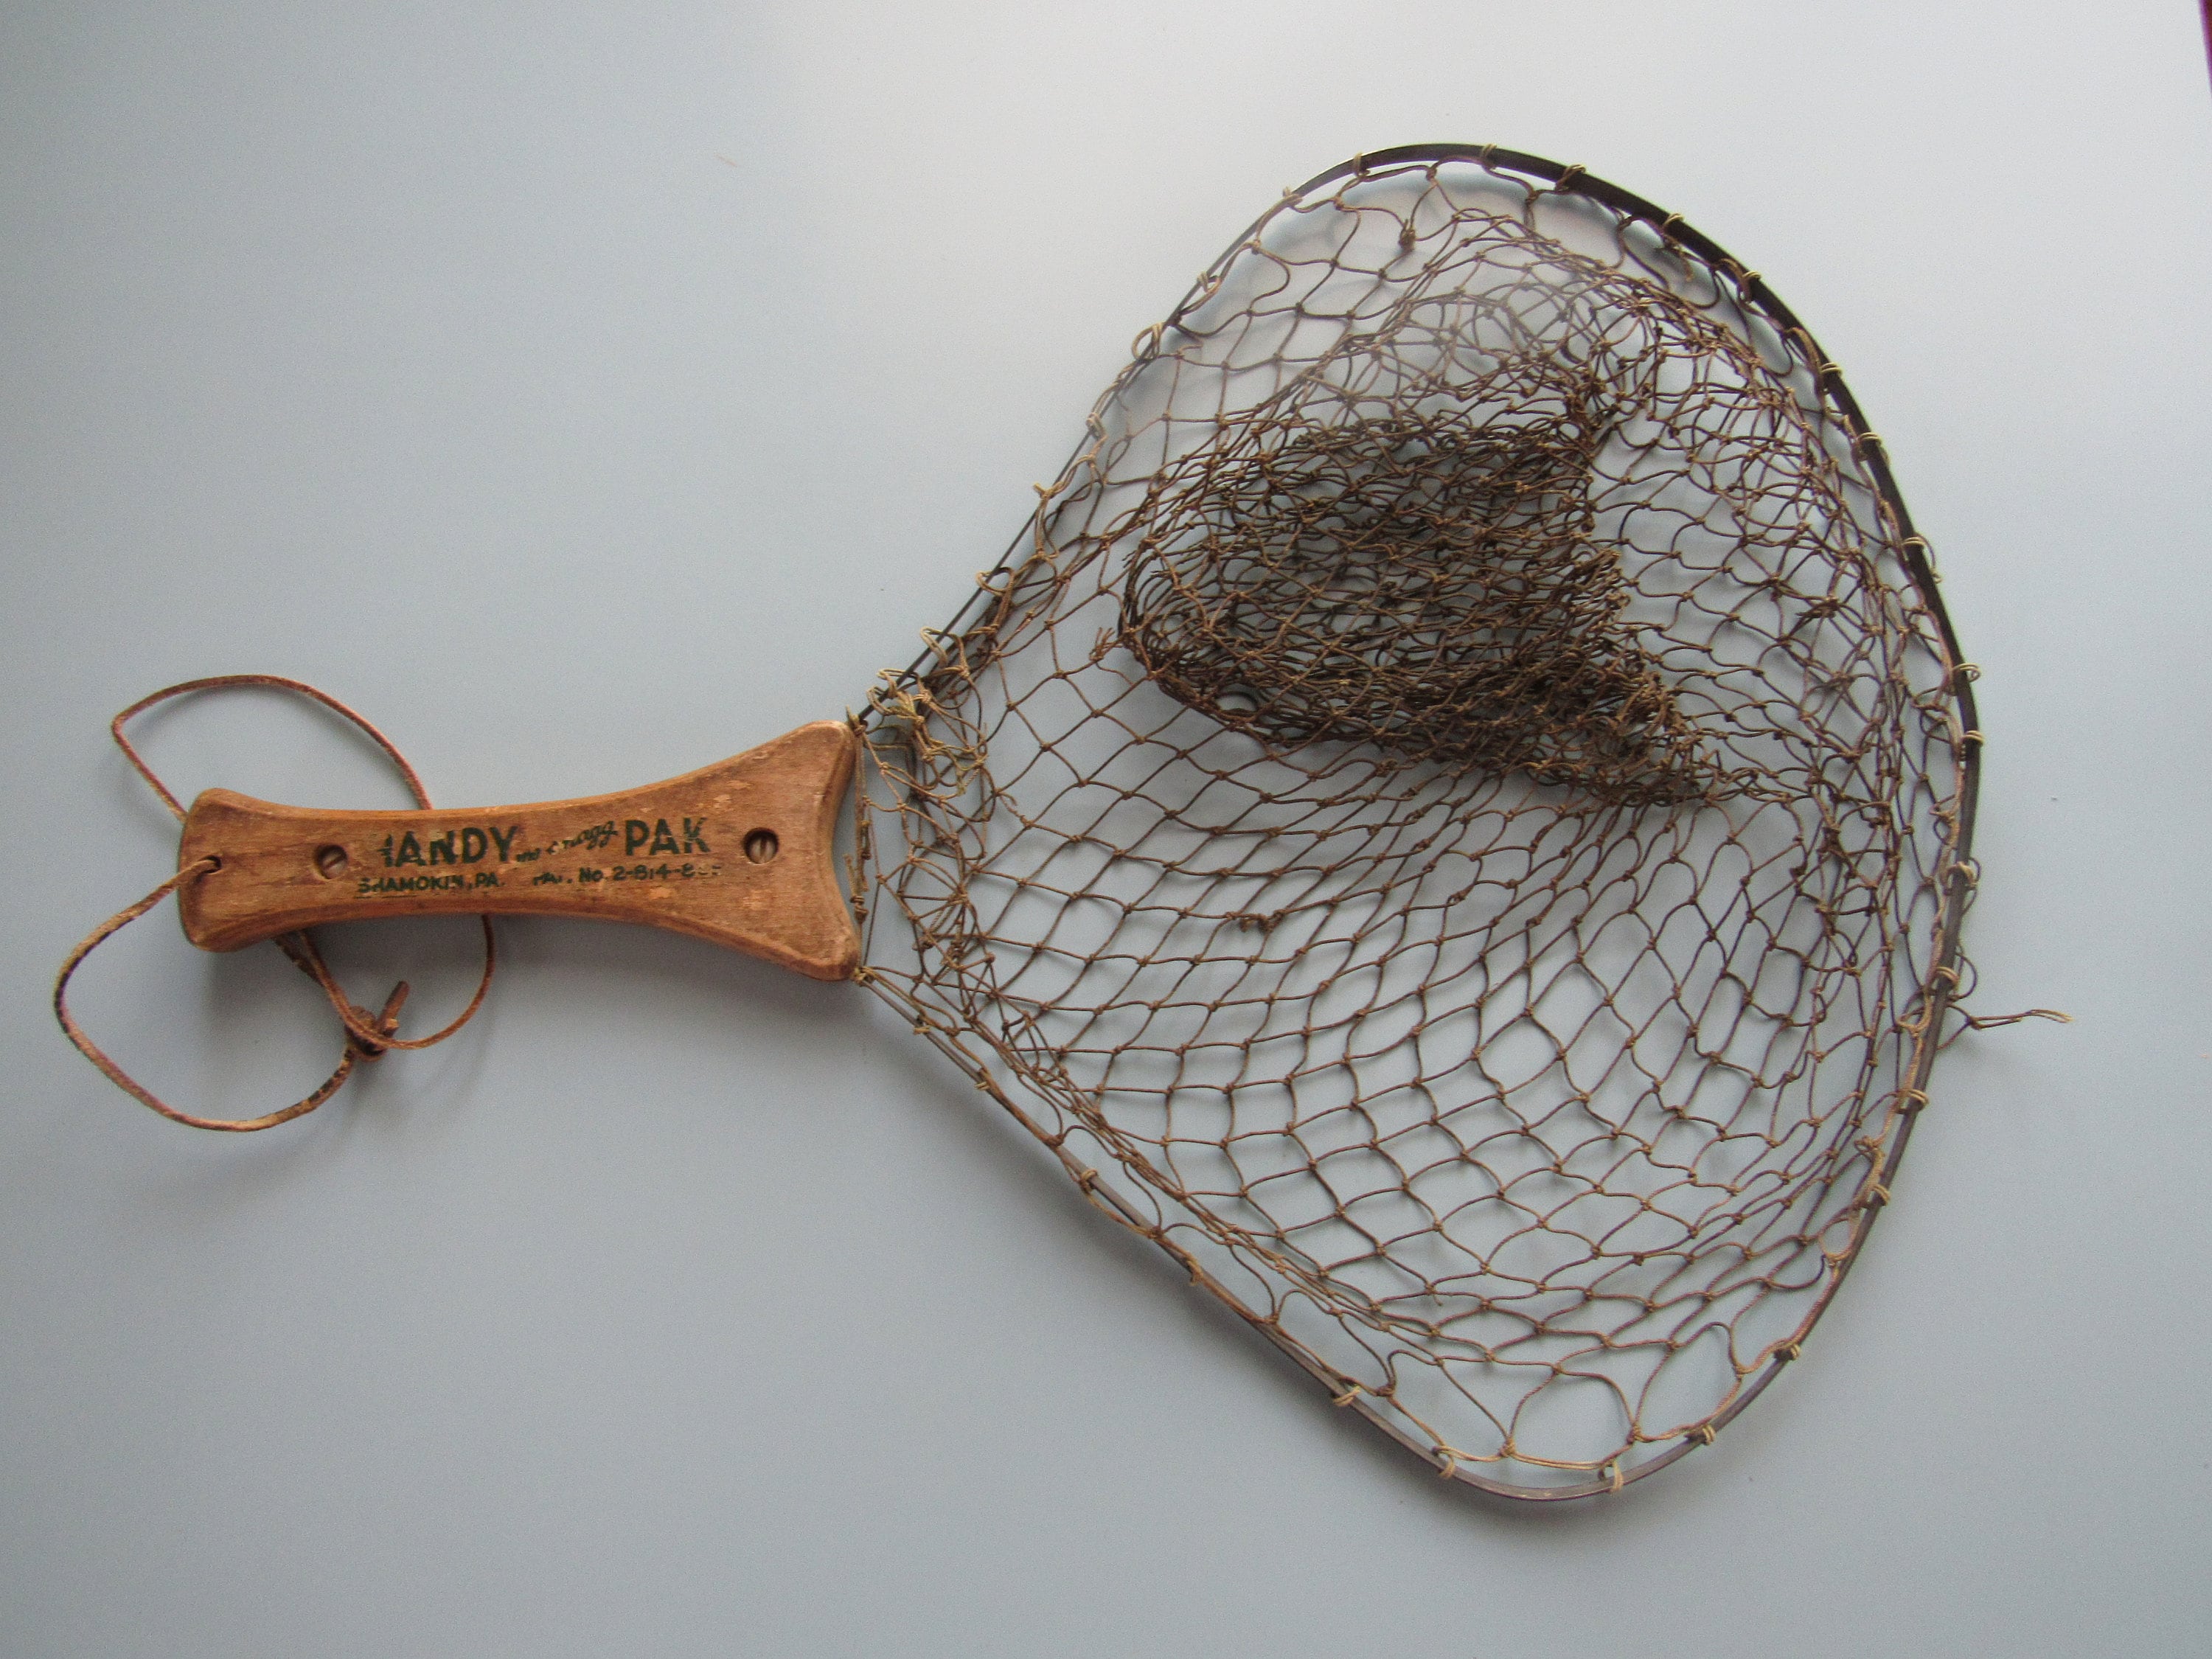 Vintage Handy Pak Fly Fishing Net Free Shipping